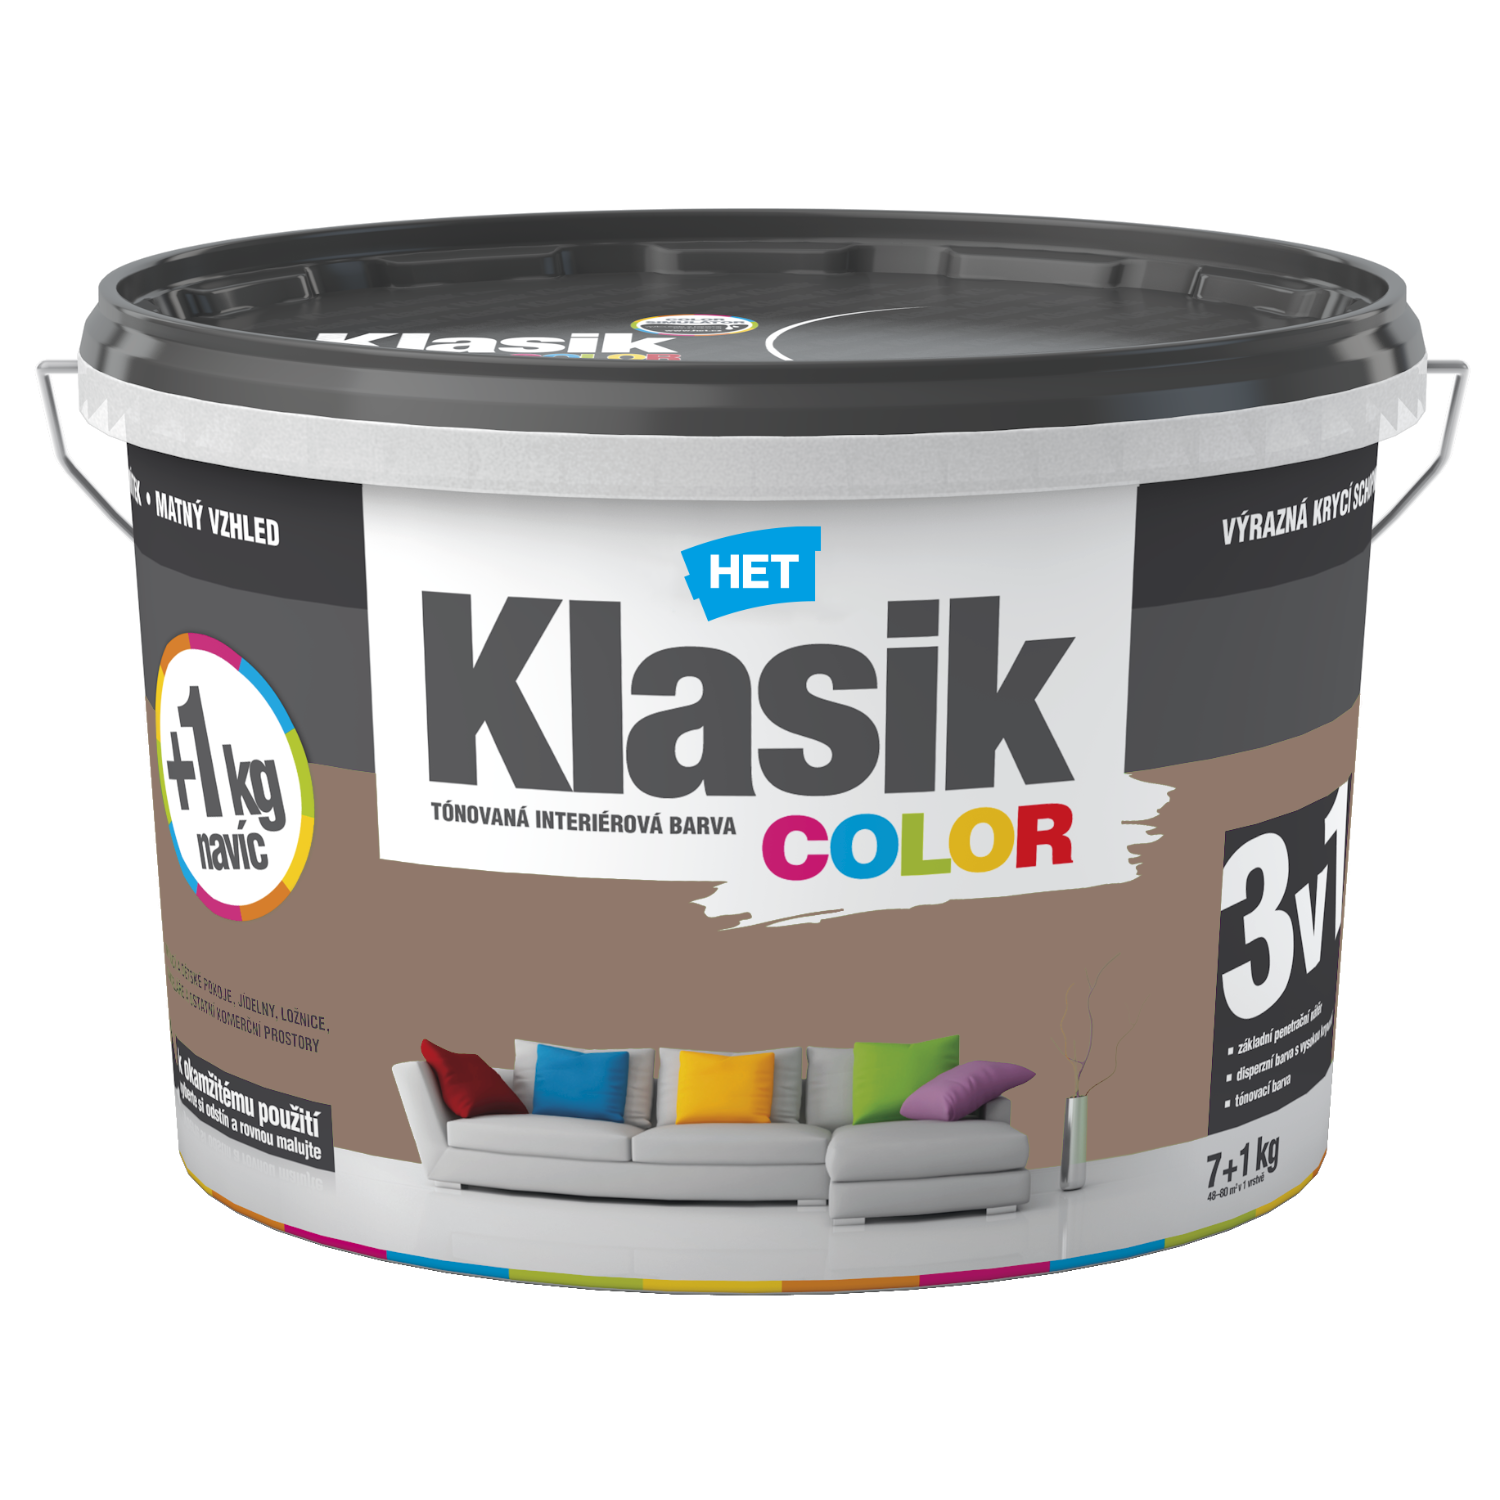 HET Klasik COLOR tónovaná interiérová akrylátová disperzná oteruvzdorná farba 7 kg + 1 kg zdarma, KC0277 - hnedý čokoládový